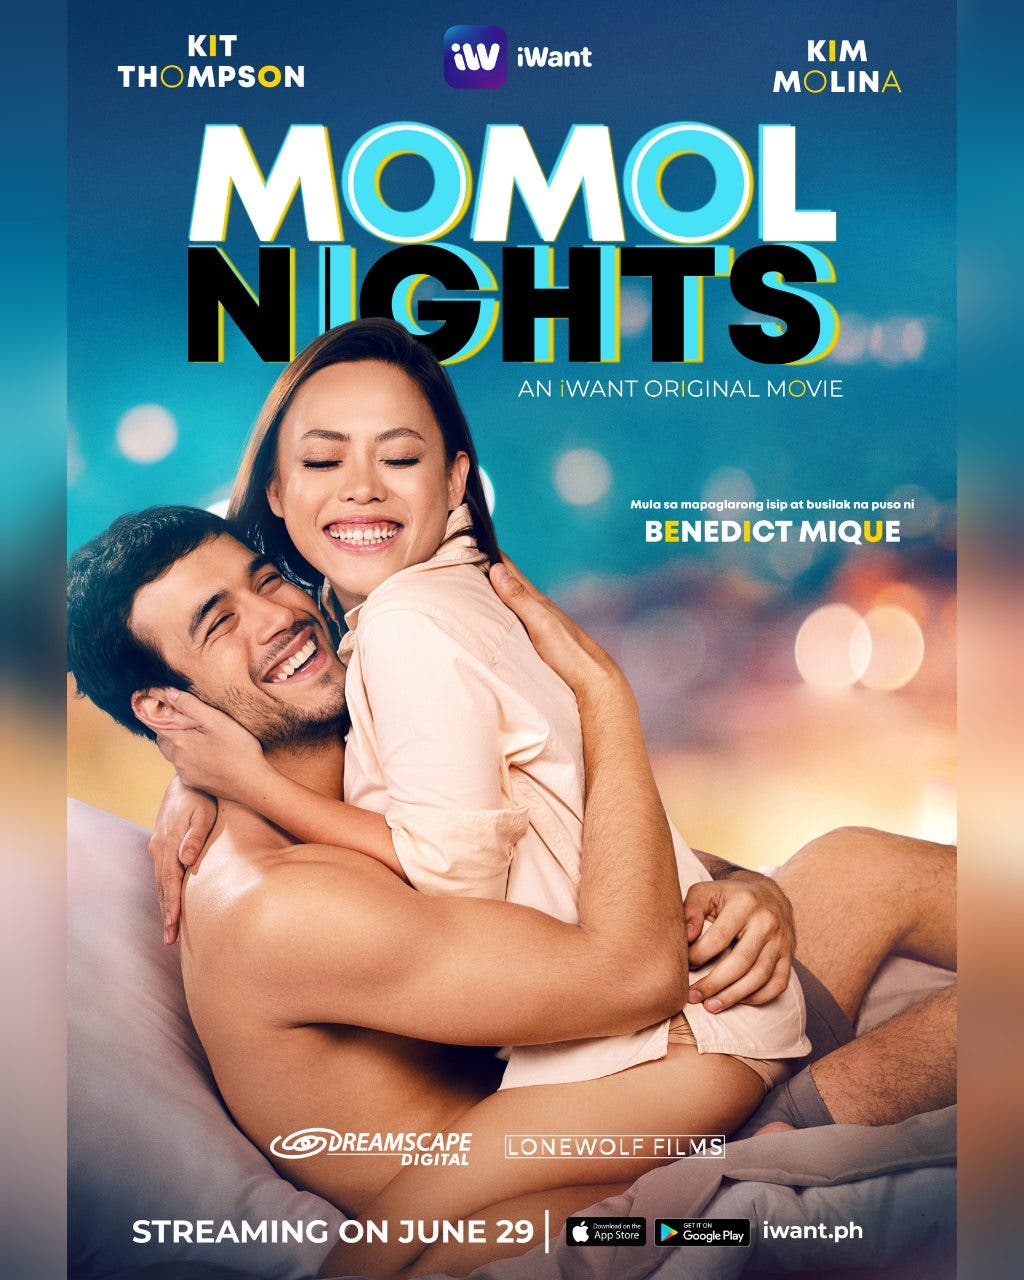 Kim Molina and Kit Thompson Star in iWant Original Movie ‘Momol N...